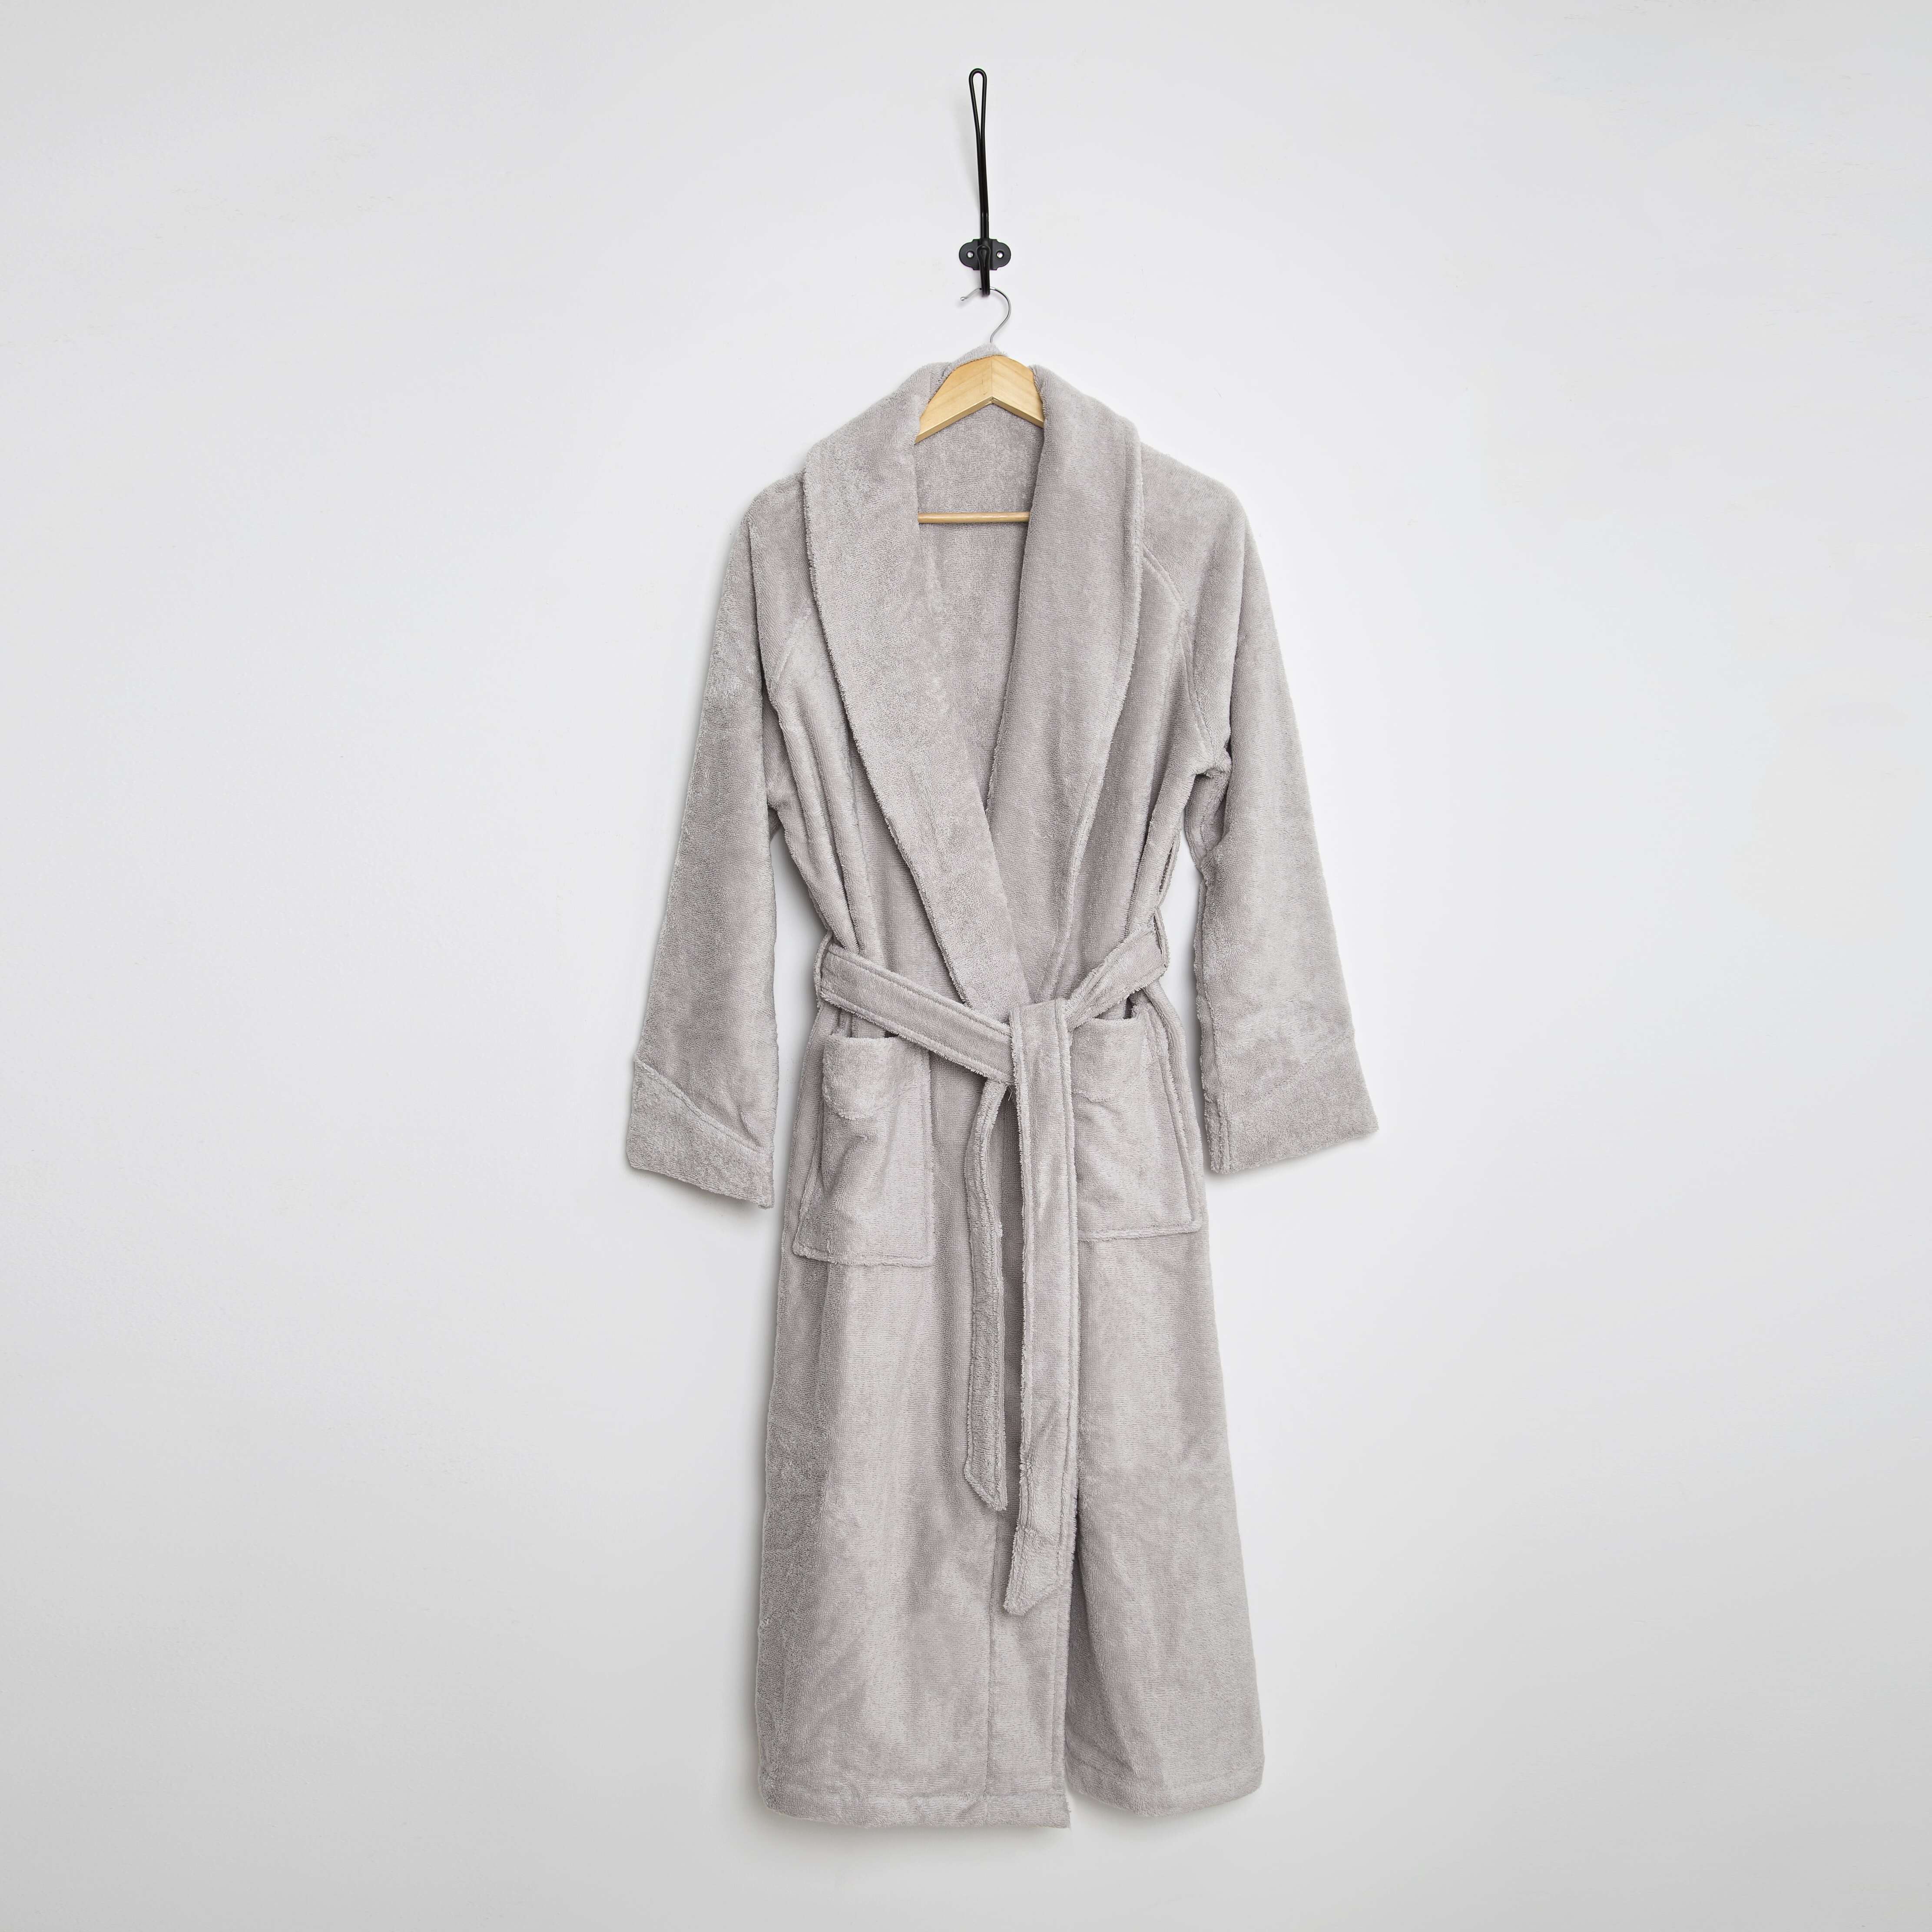 Ploh Plush Robe  Robes & Towels by Ploh